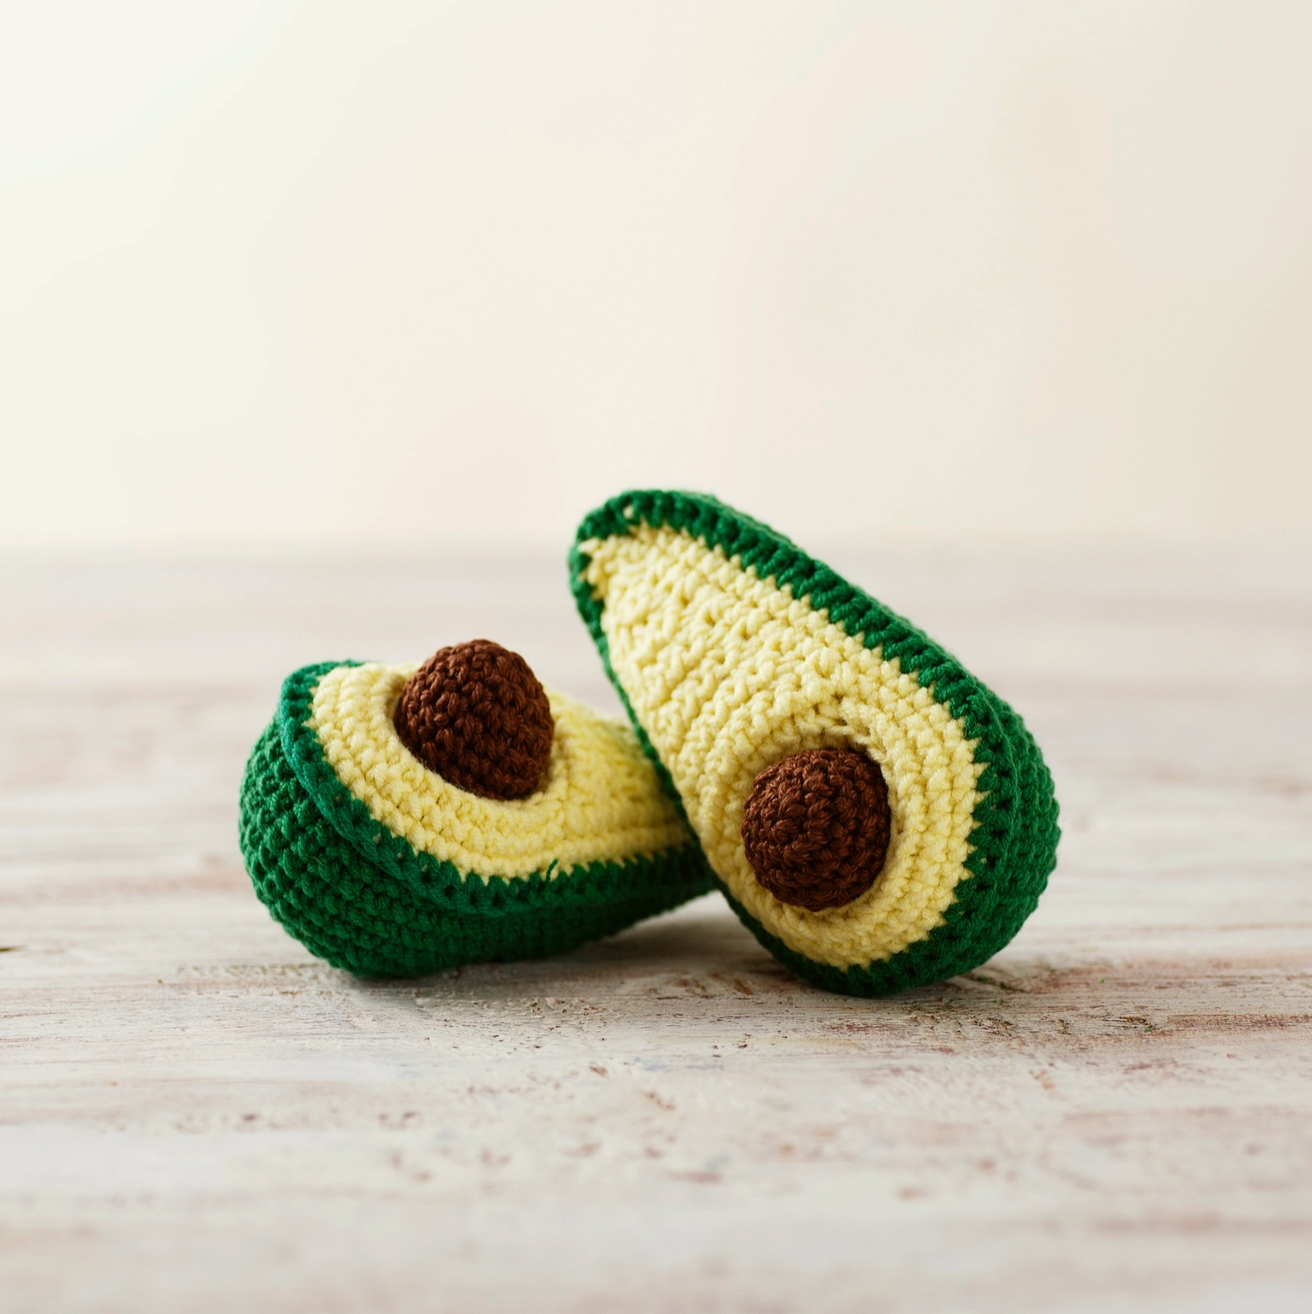 Crochet Play Food: Avocado